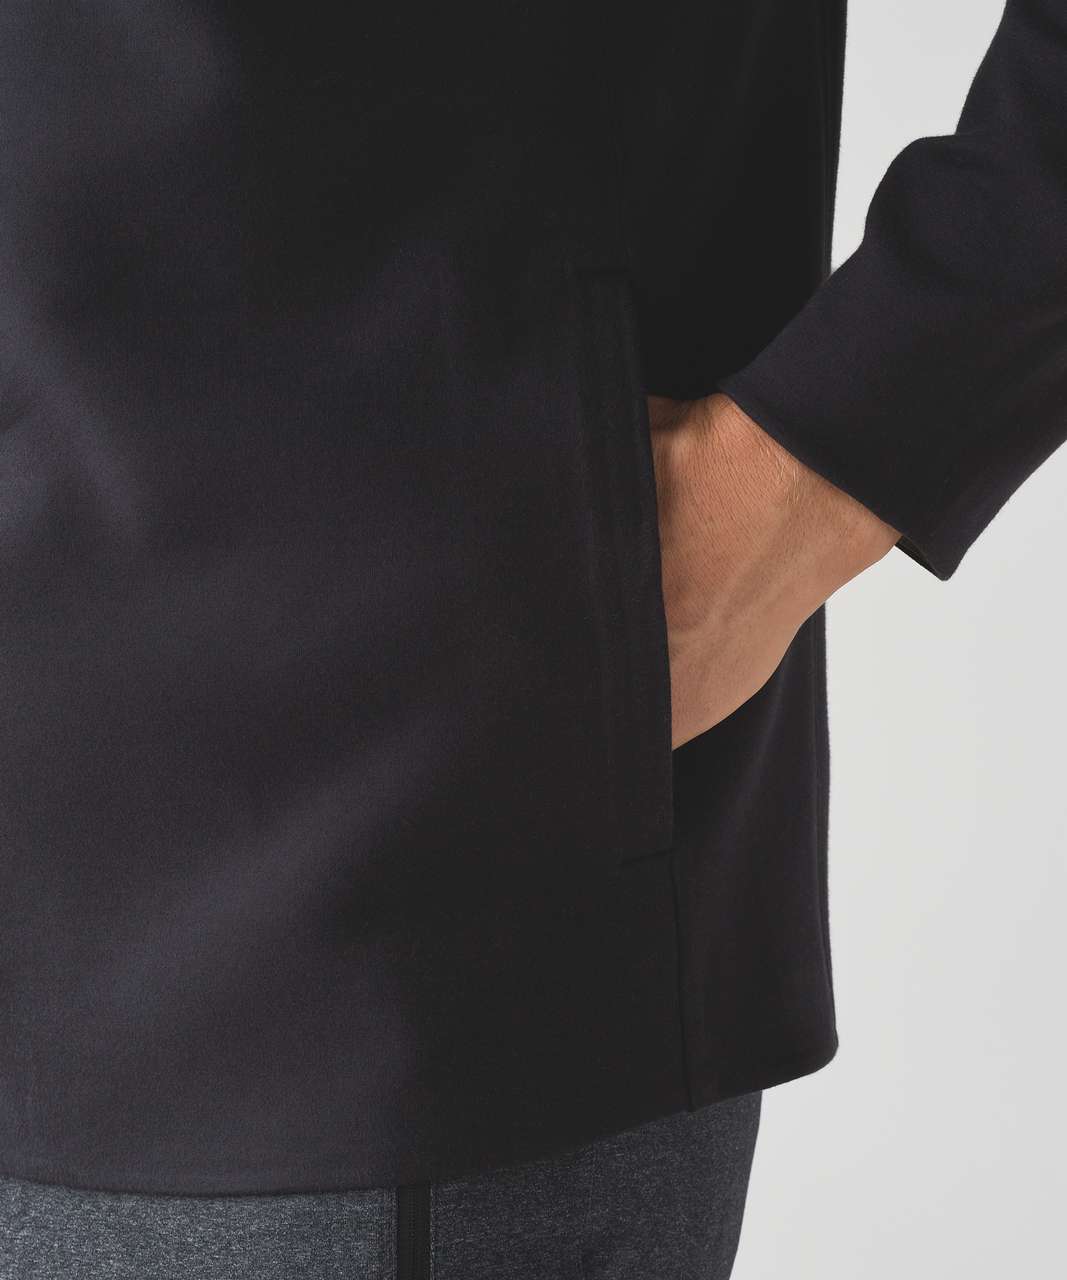 Lululemon Chamber Long Sleeve - Black / Heathered Uniform Fatigue